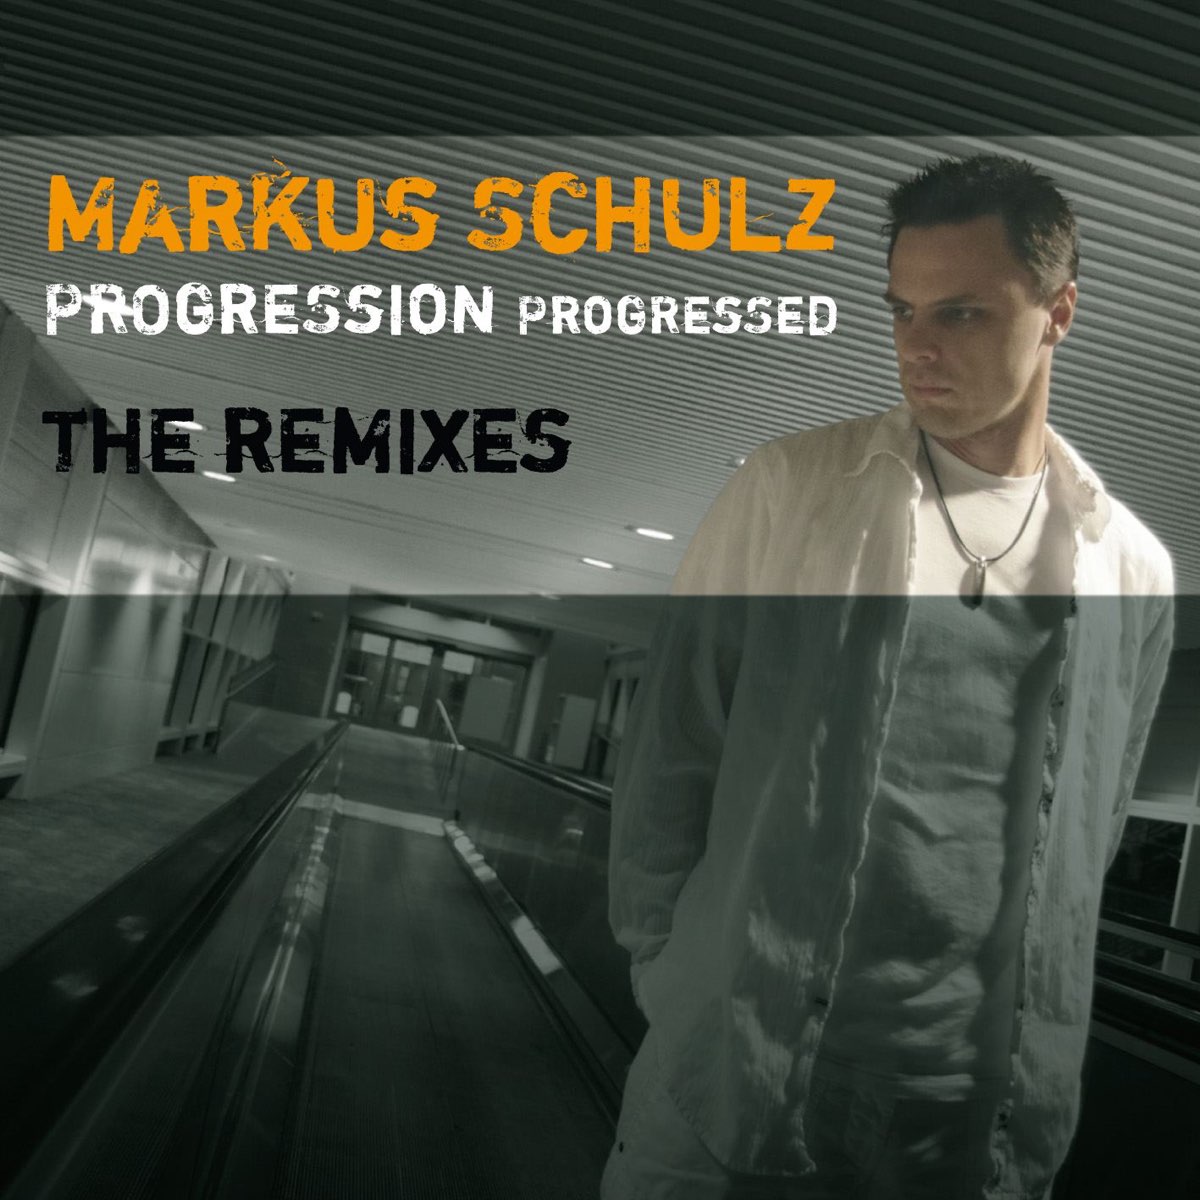 Are being progressed. Маркус Шульц. 2007 - Progression Schulz. Маркус Шульц лучший альбом. Markus Schulz progression progressed.